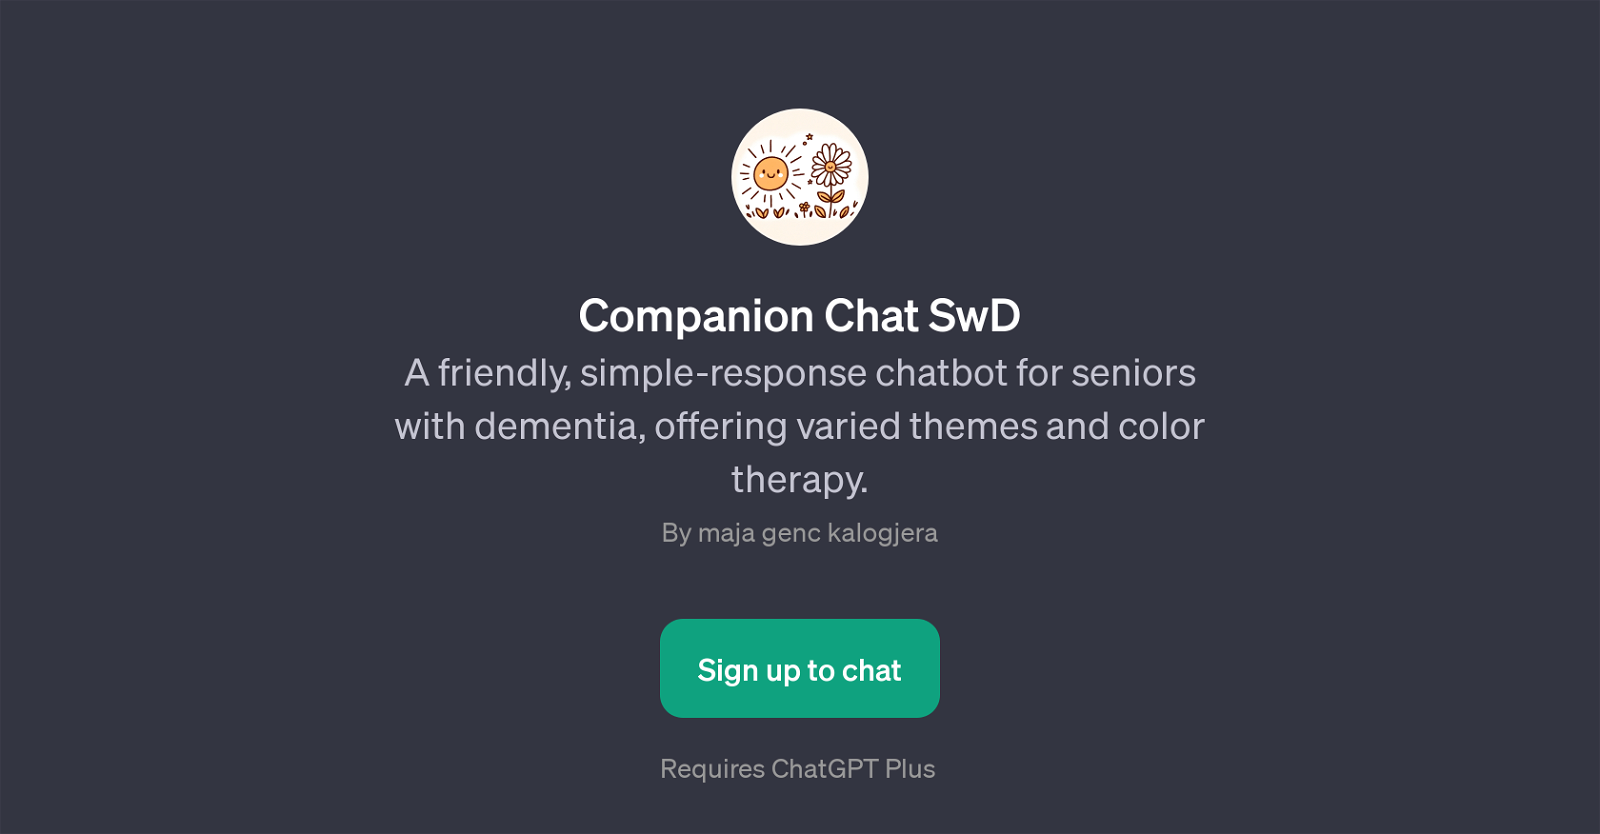 Companion Chat SwD website